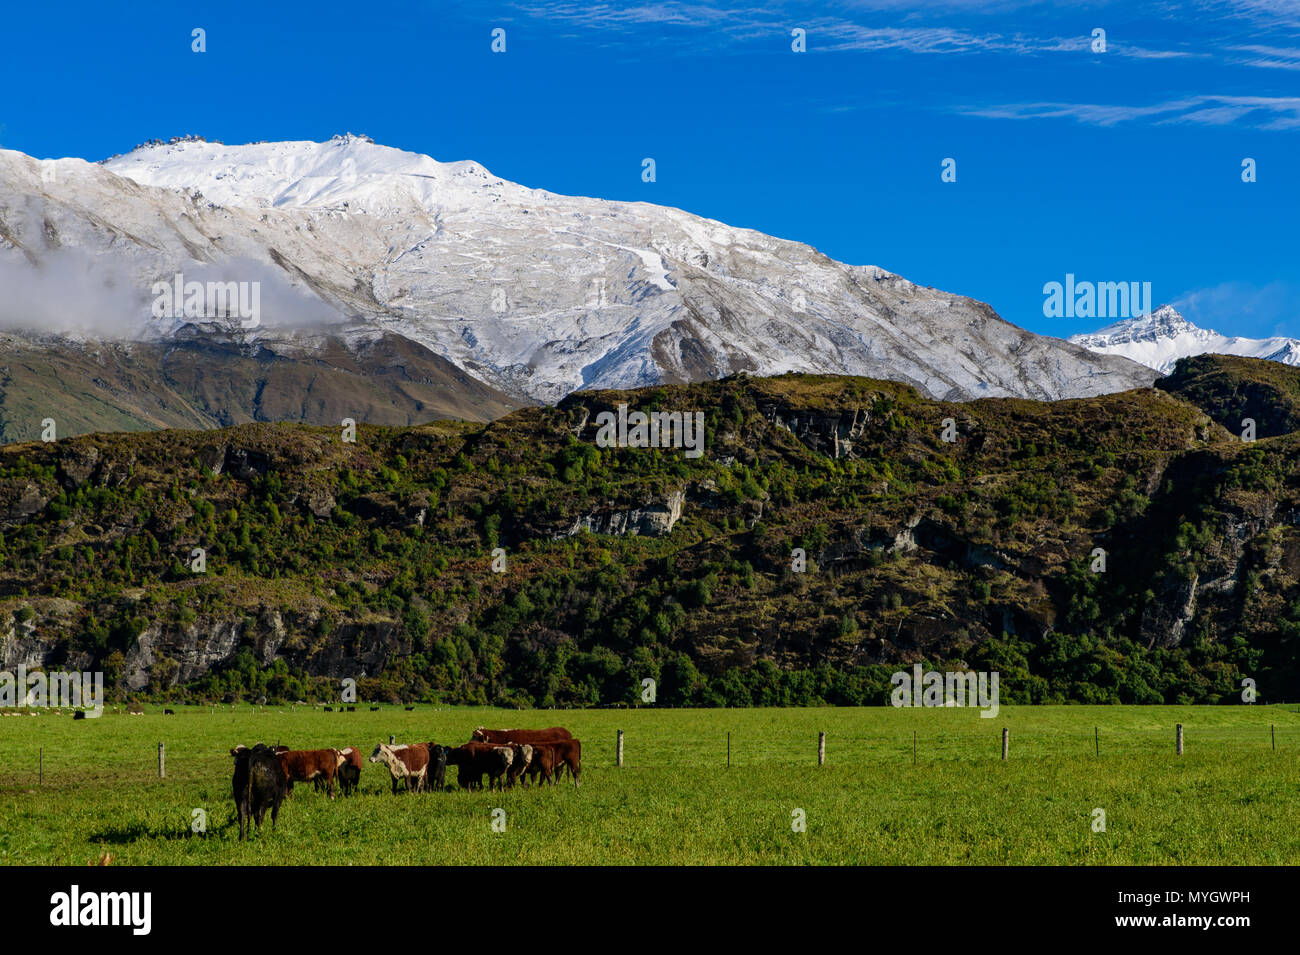 Snow mountains and natural views in Matukituki Valley area, Mount Aspiring National Park, South Island, New Zealand Stock Photo